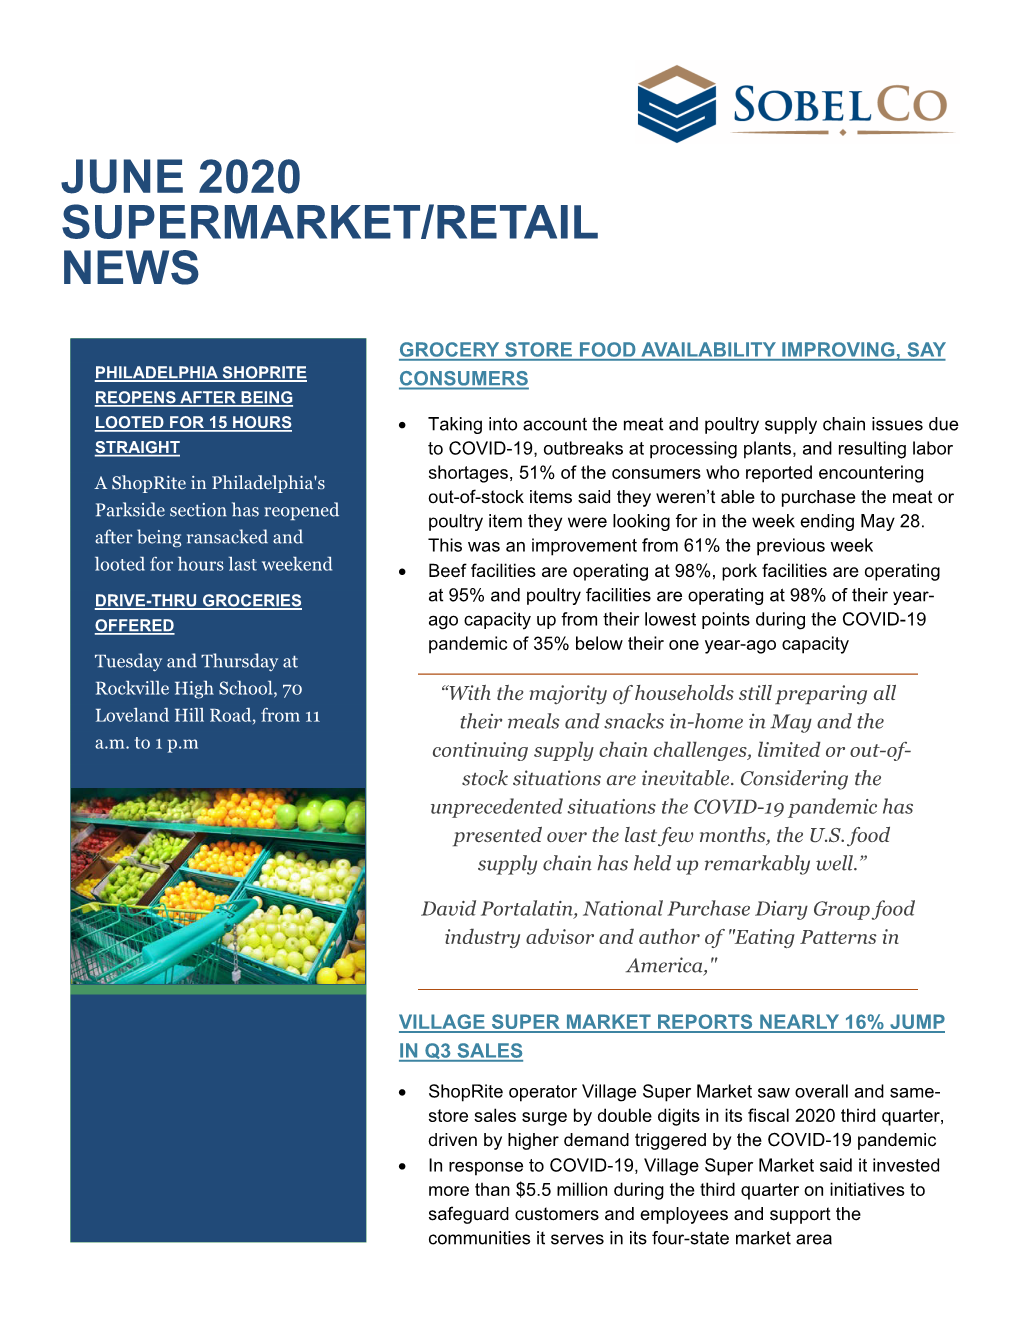 June 2020 Supermarket/Retail News